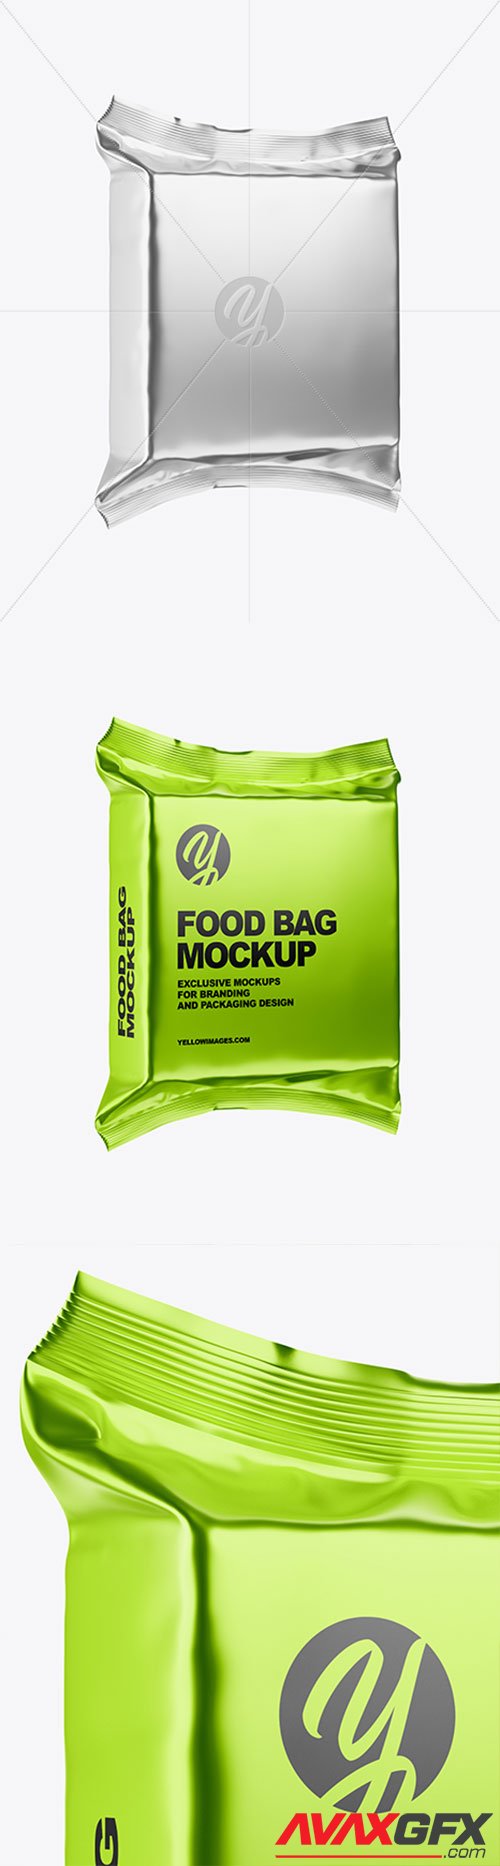 Metallic Food Bag Mockup 39917